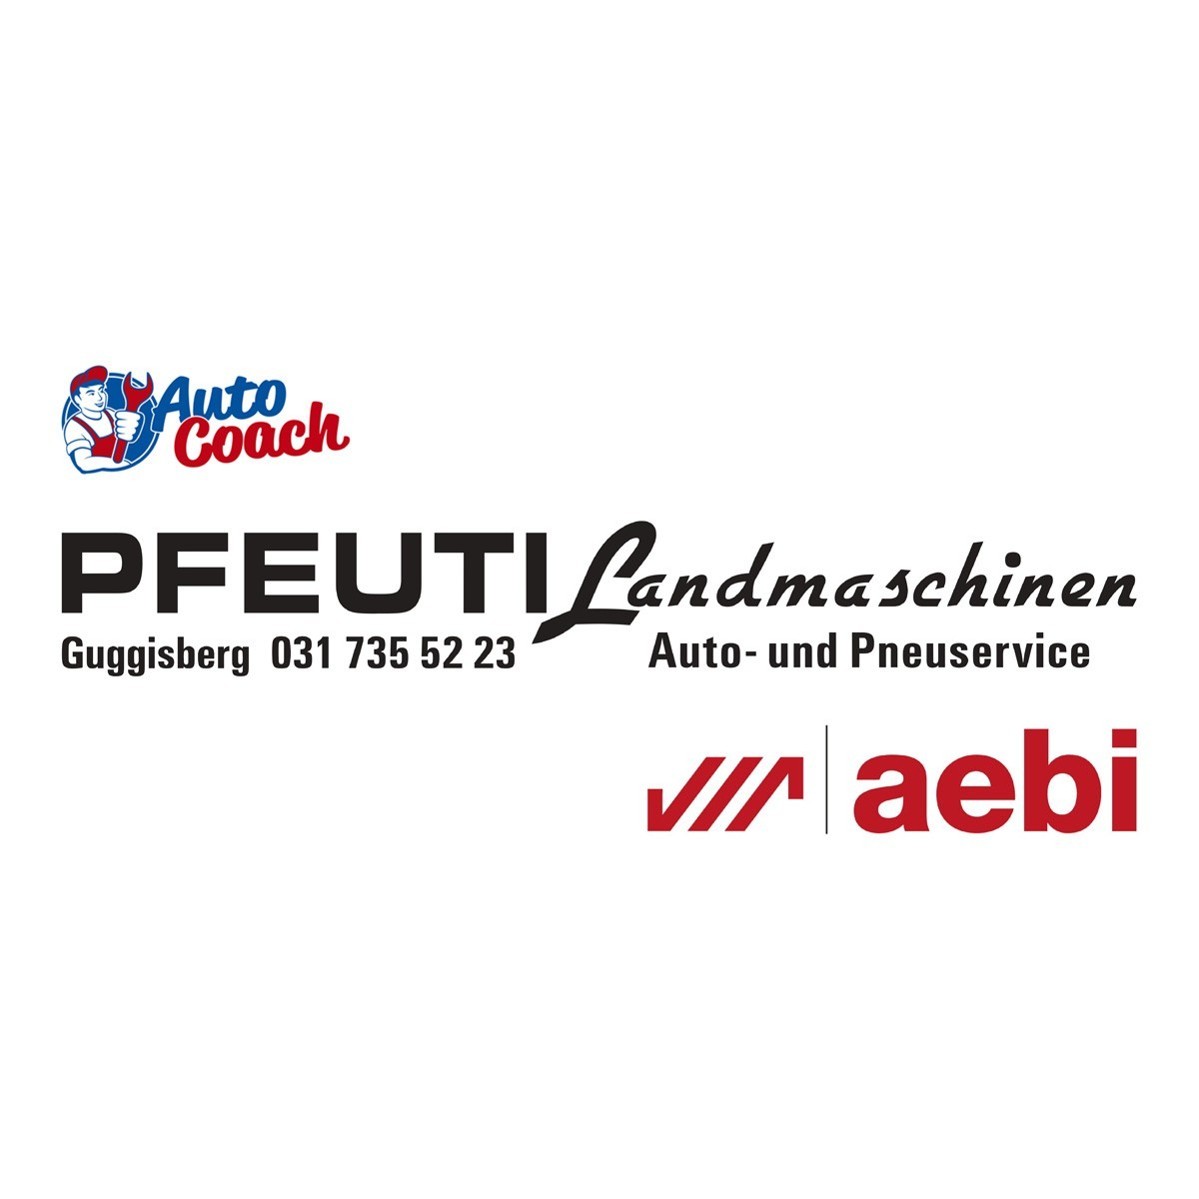 Pfeuti Landmaschinen GmbH Logo